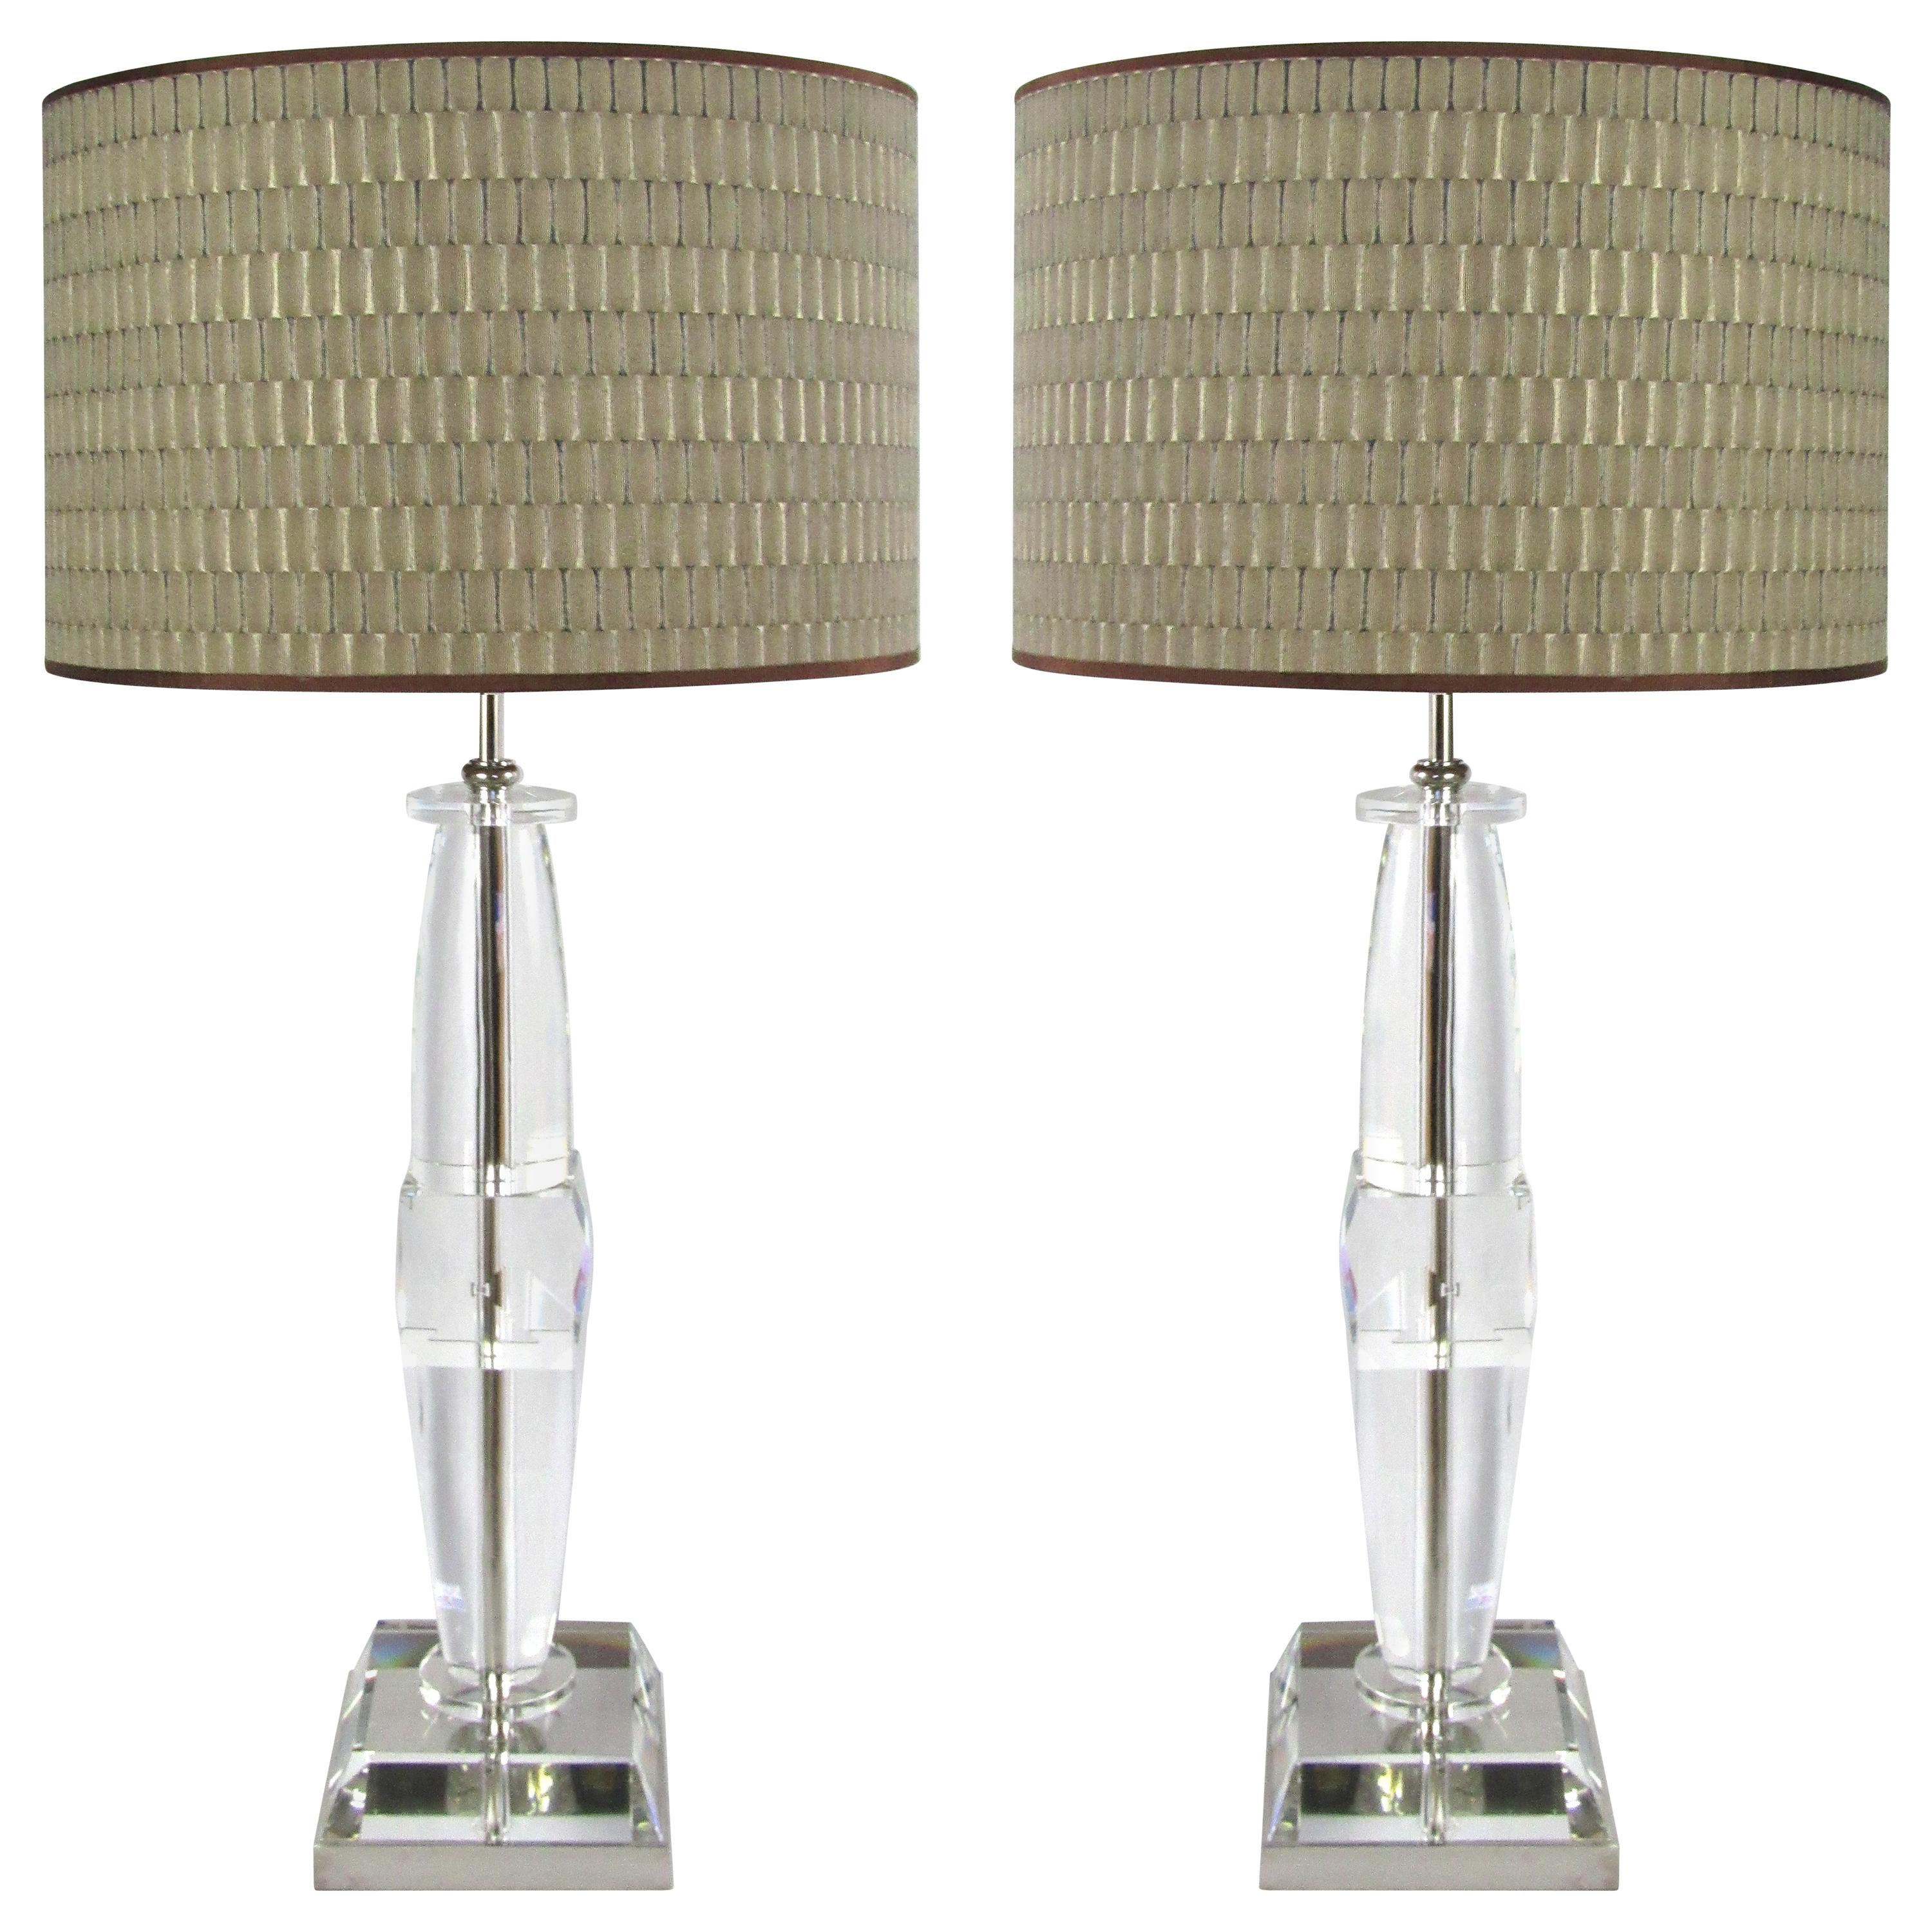 Laudarte Srl Leo Marai Golia Table Lamp by Attilio Amato, Pair Available